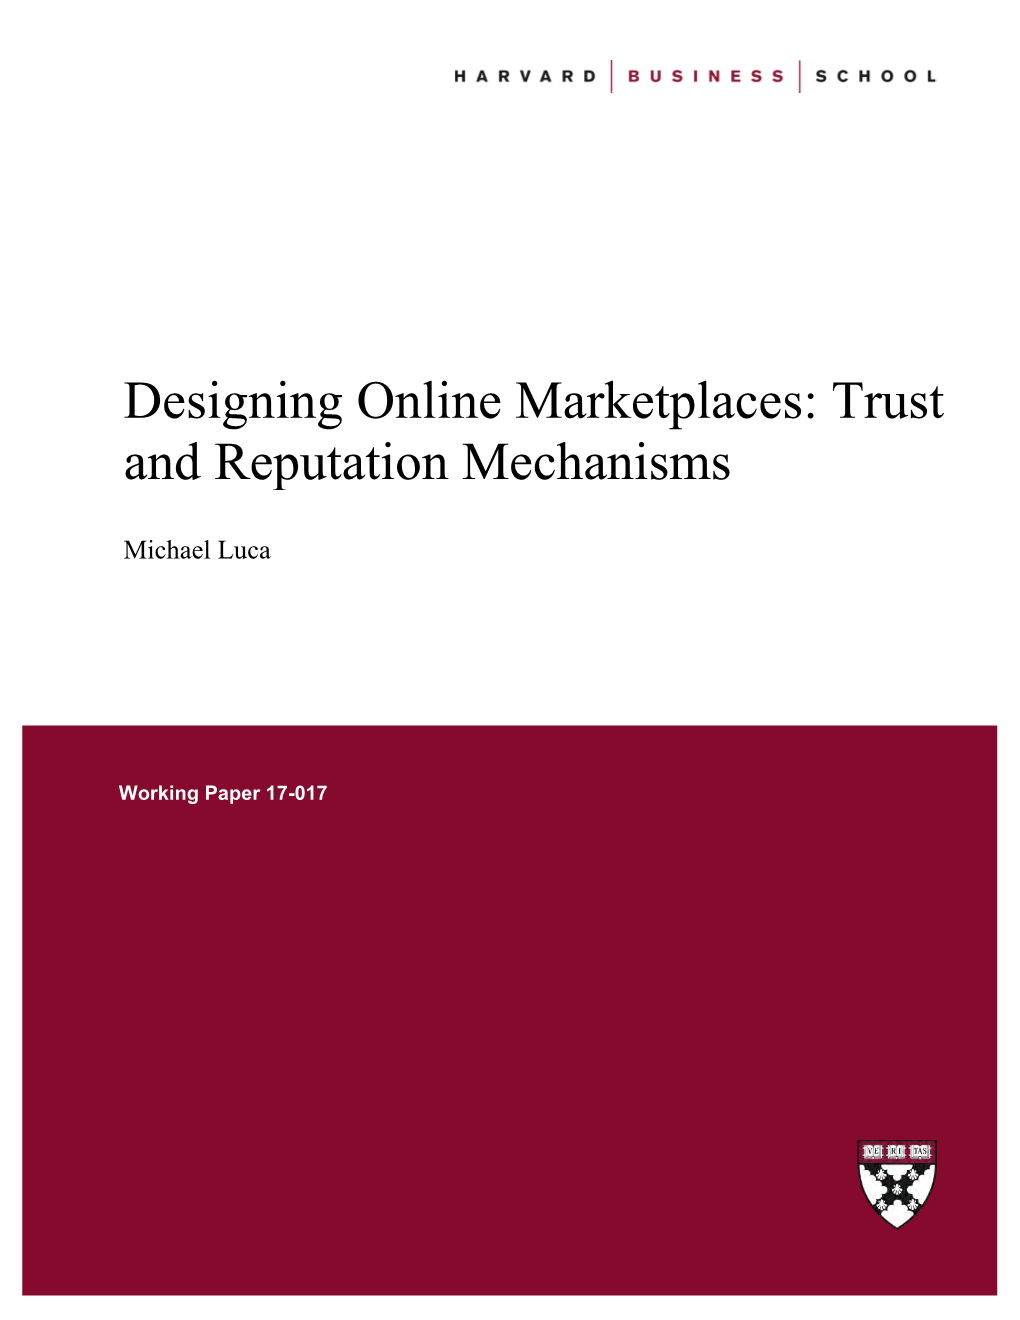 Designing Online Marketplaces: Trust and Reputation Mechanisms